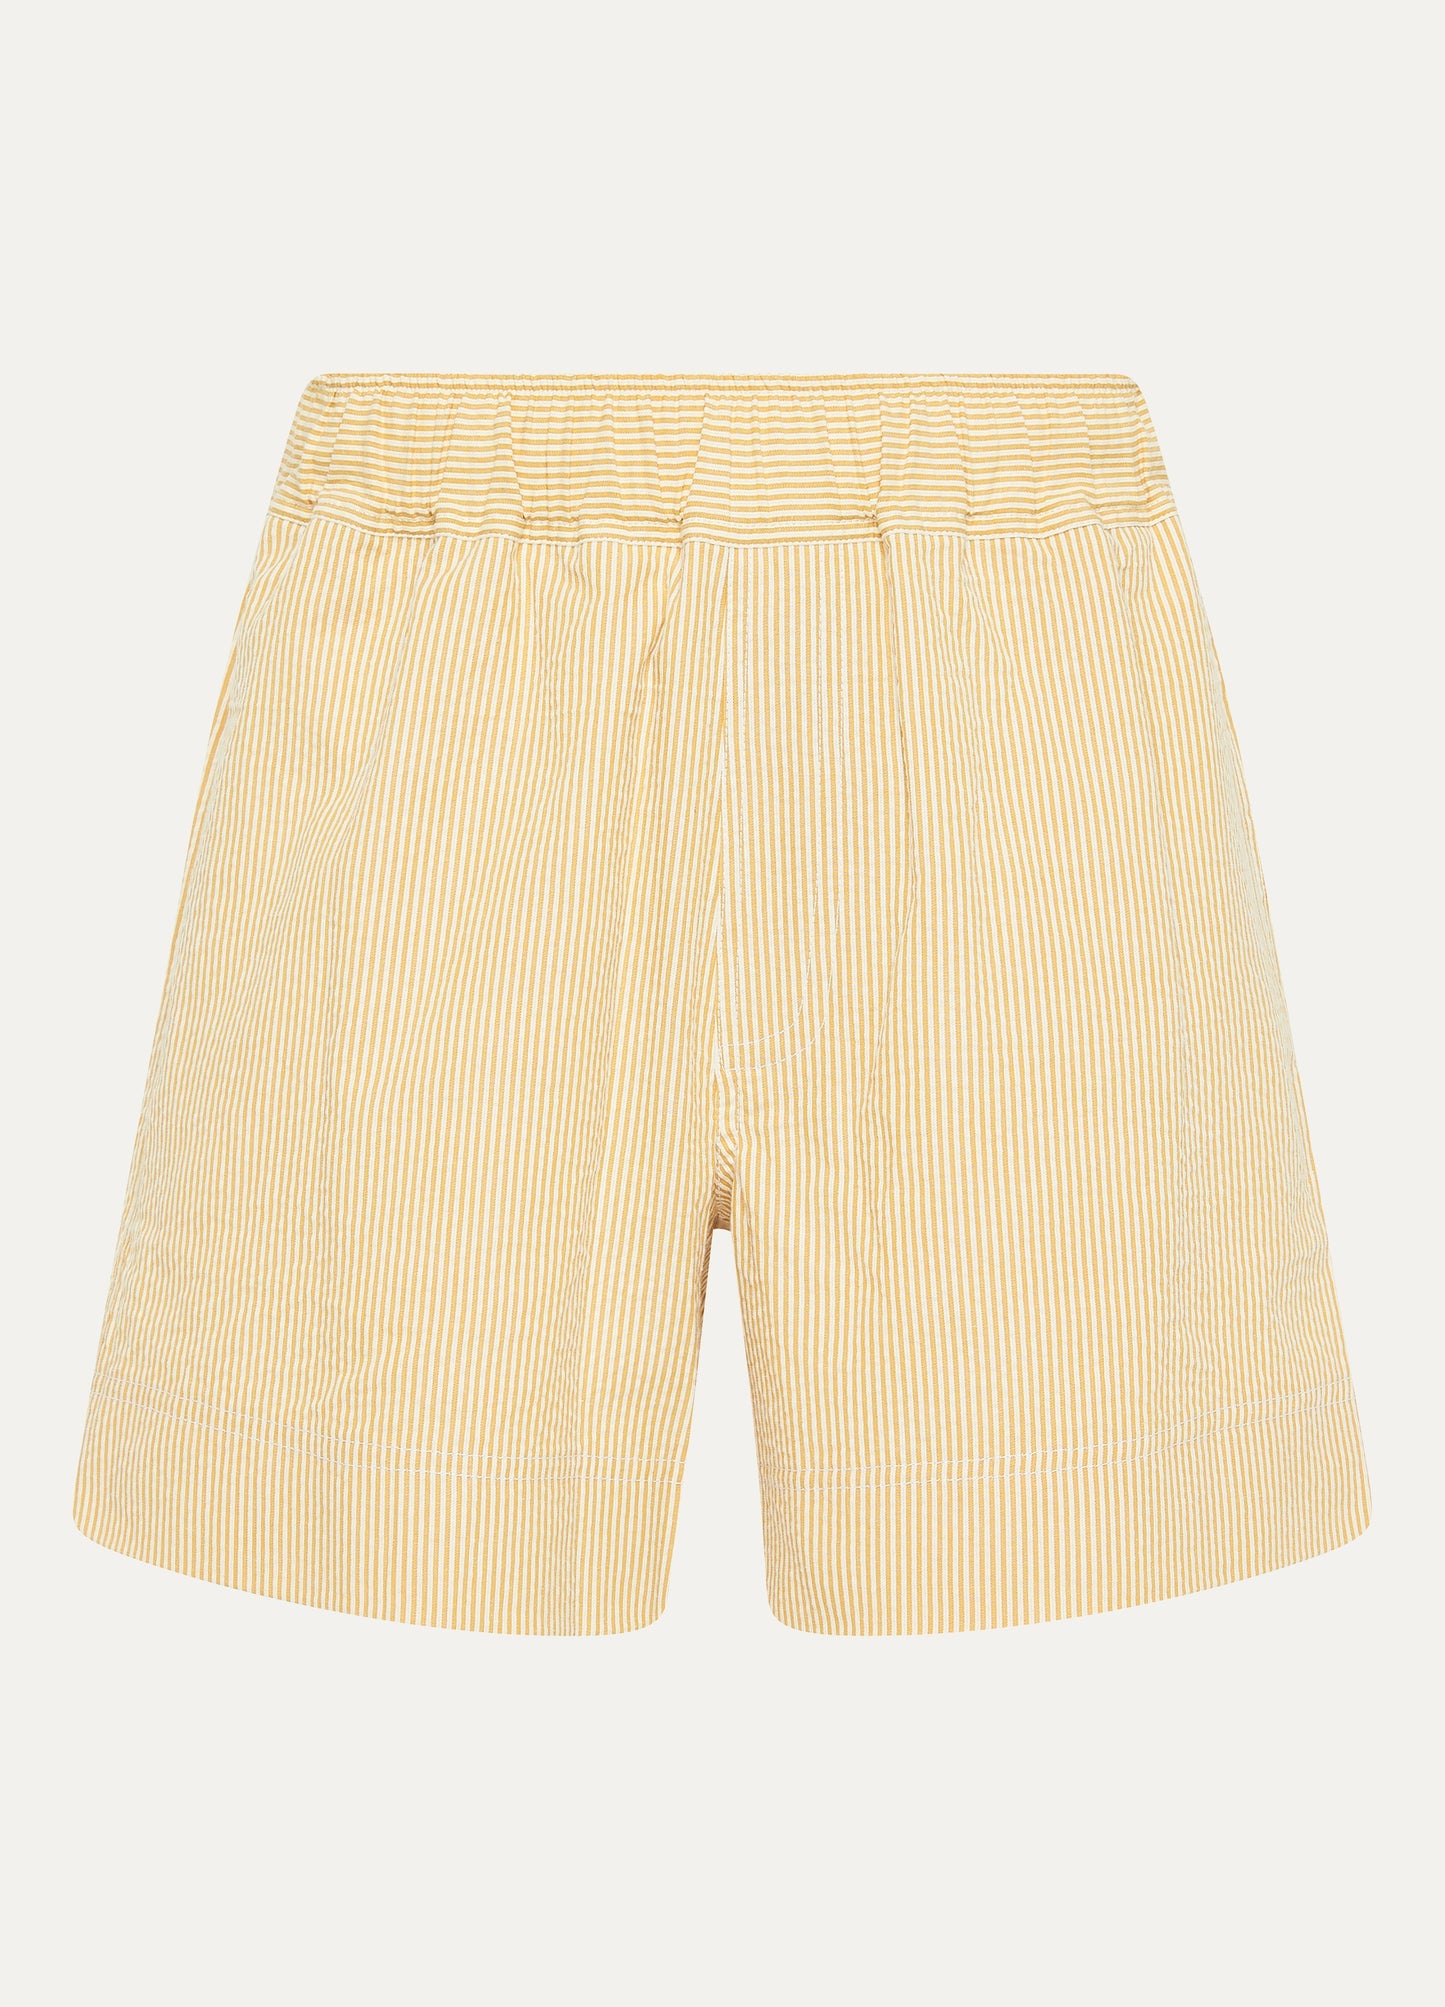 Japanese Yellow Stripe Short